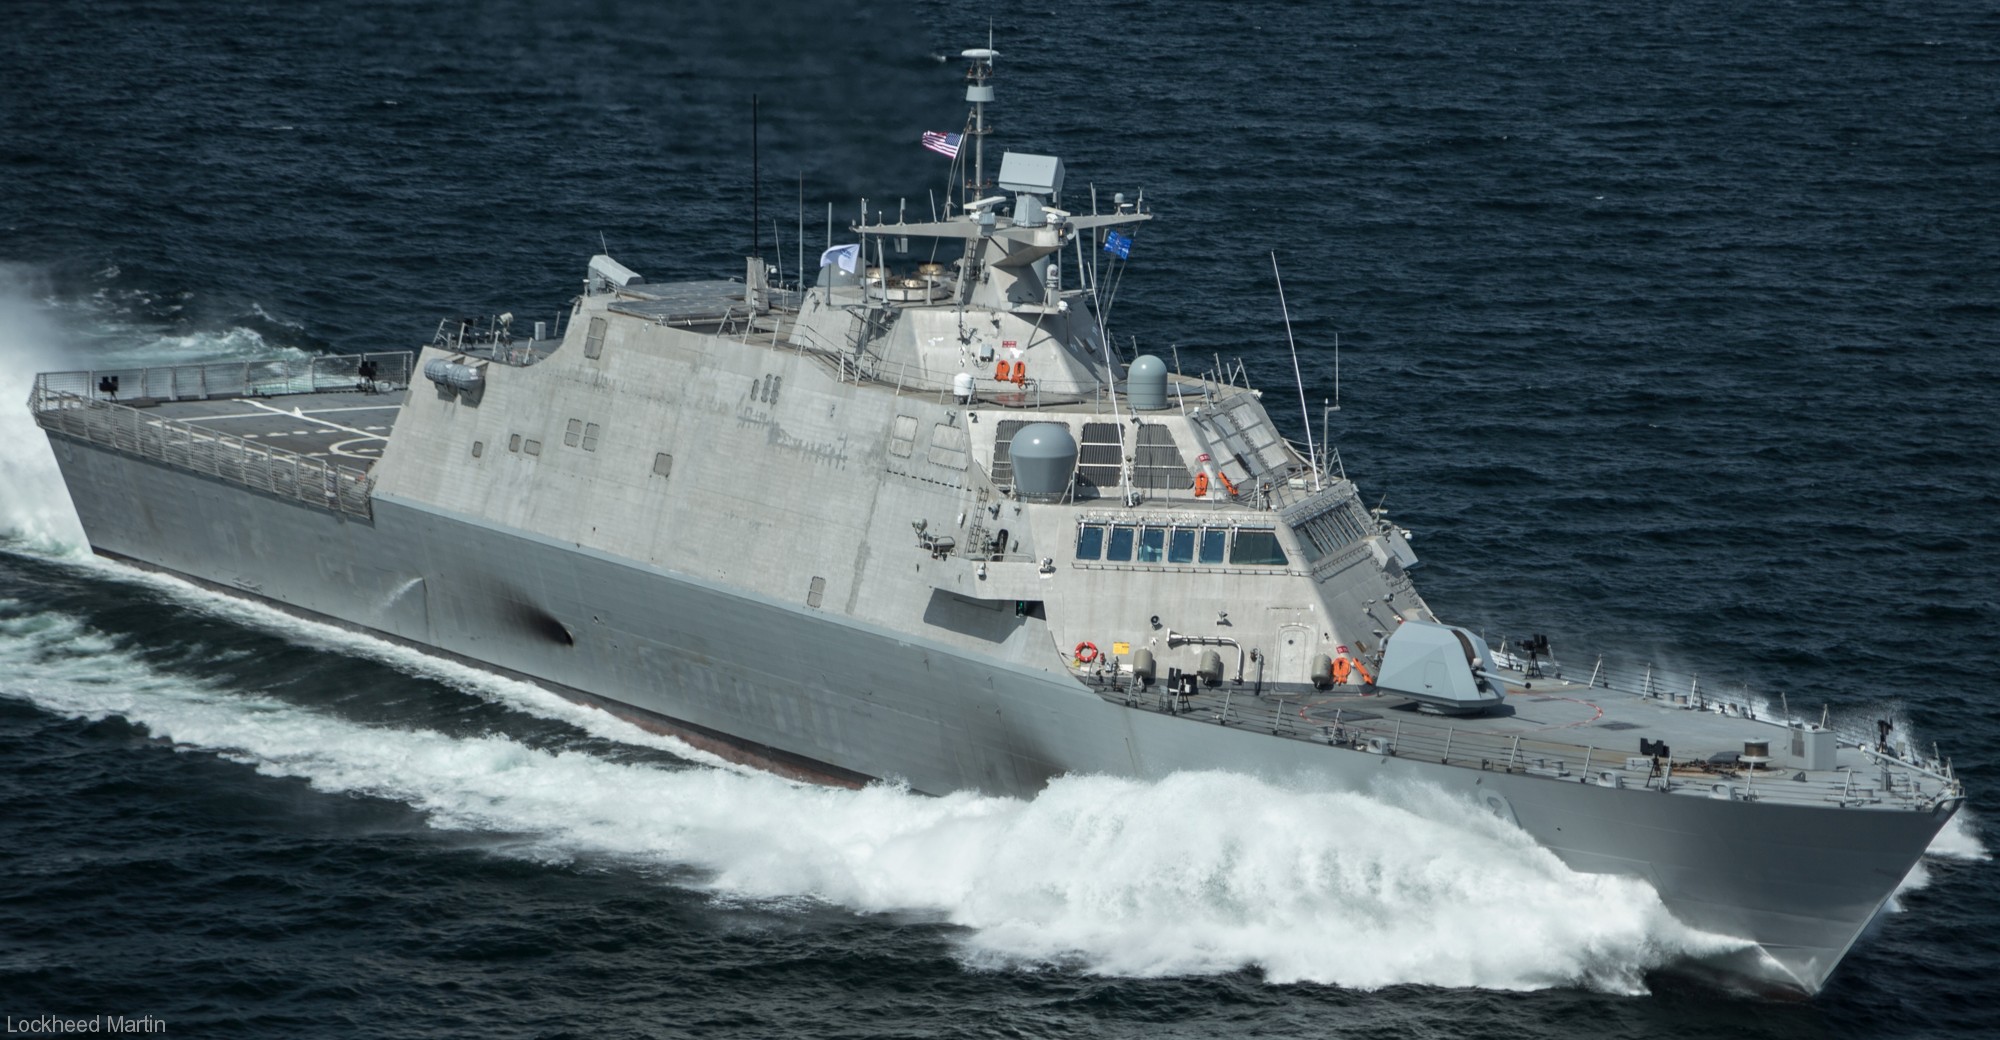 lcs-9 uss little rock freedom class littoral combat ship us navy 16a